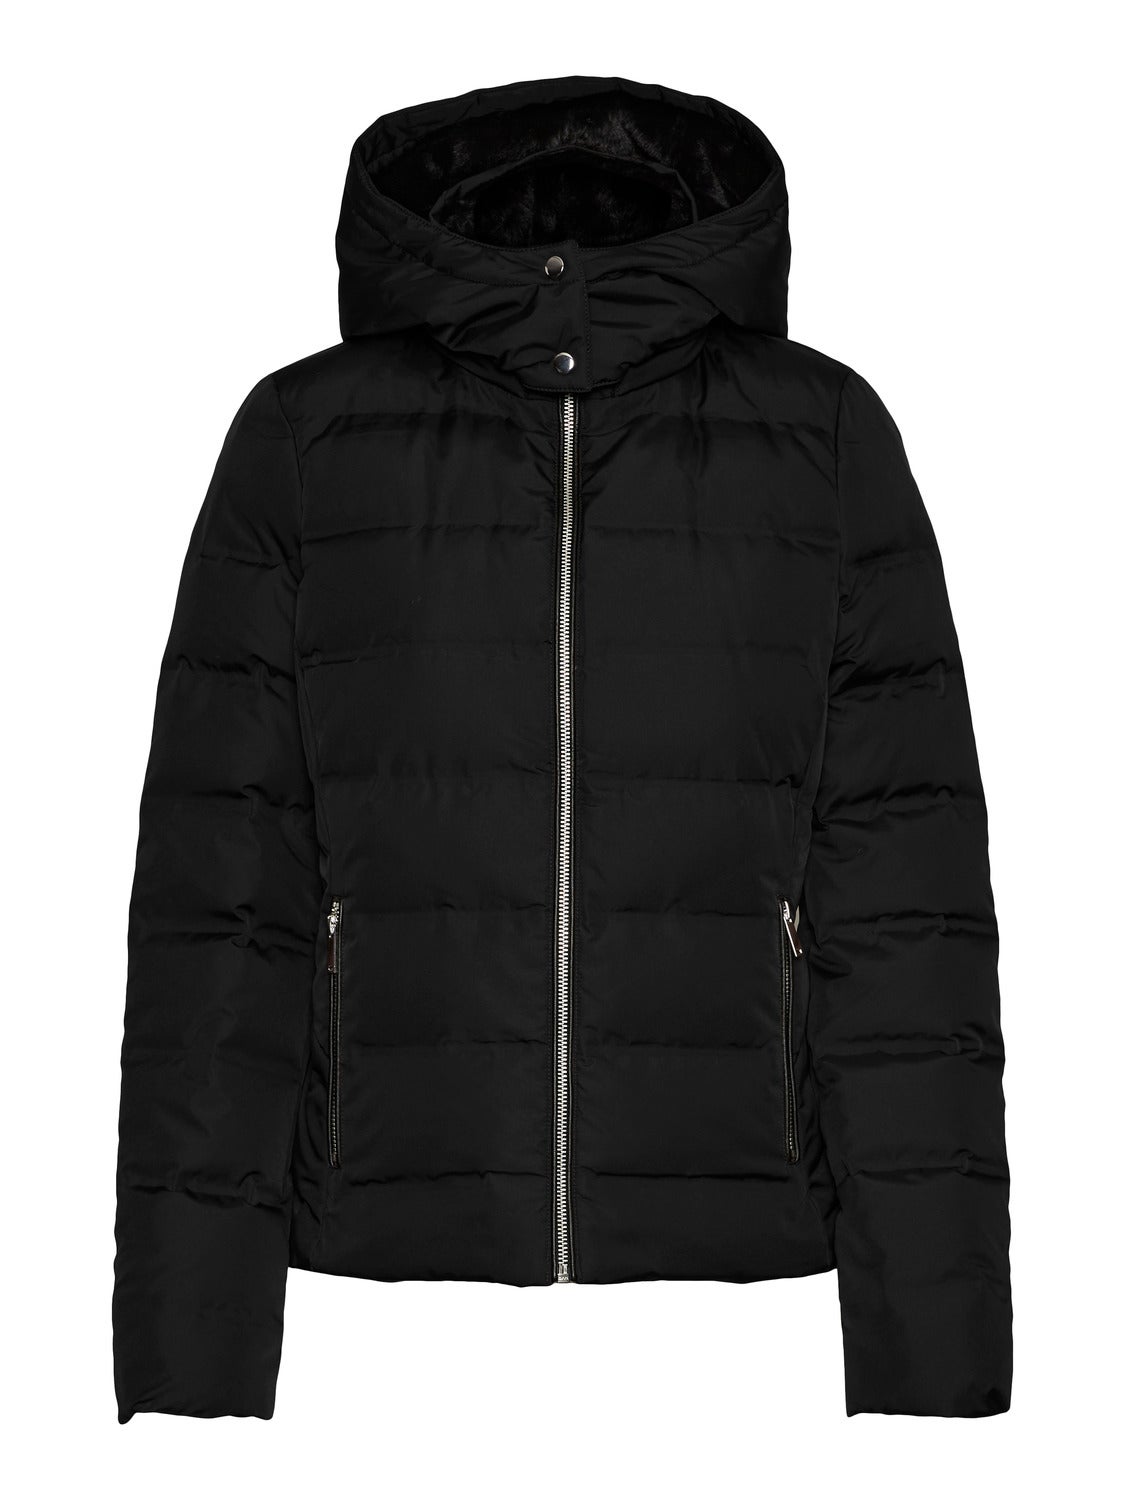 Zara Man Faux Leather Overshirt Black Size S Zip Jacket Biker Motorcycle  Coat | eBay